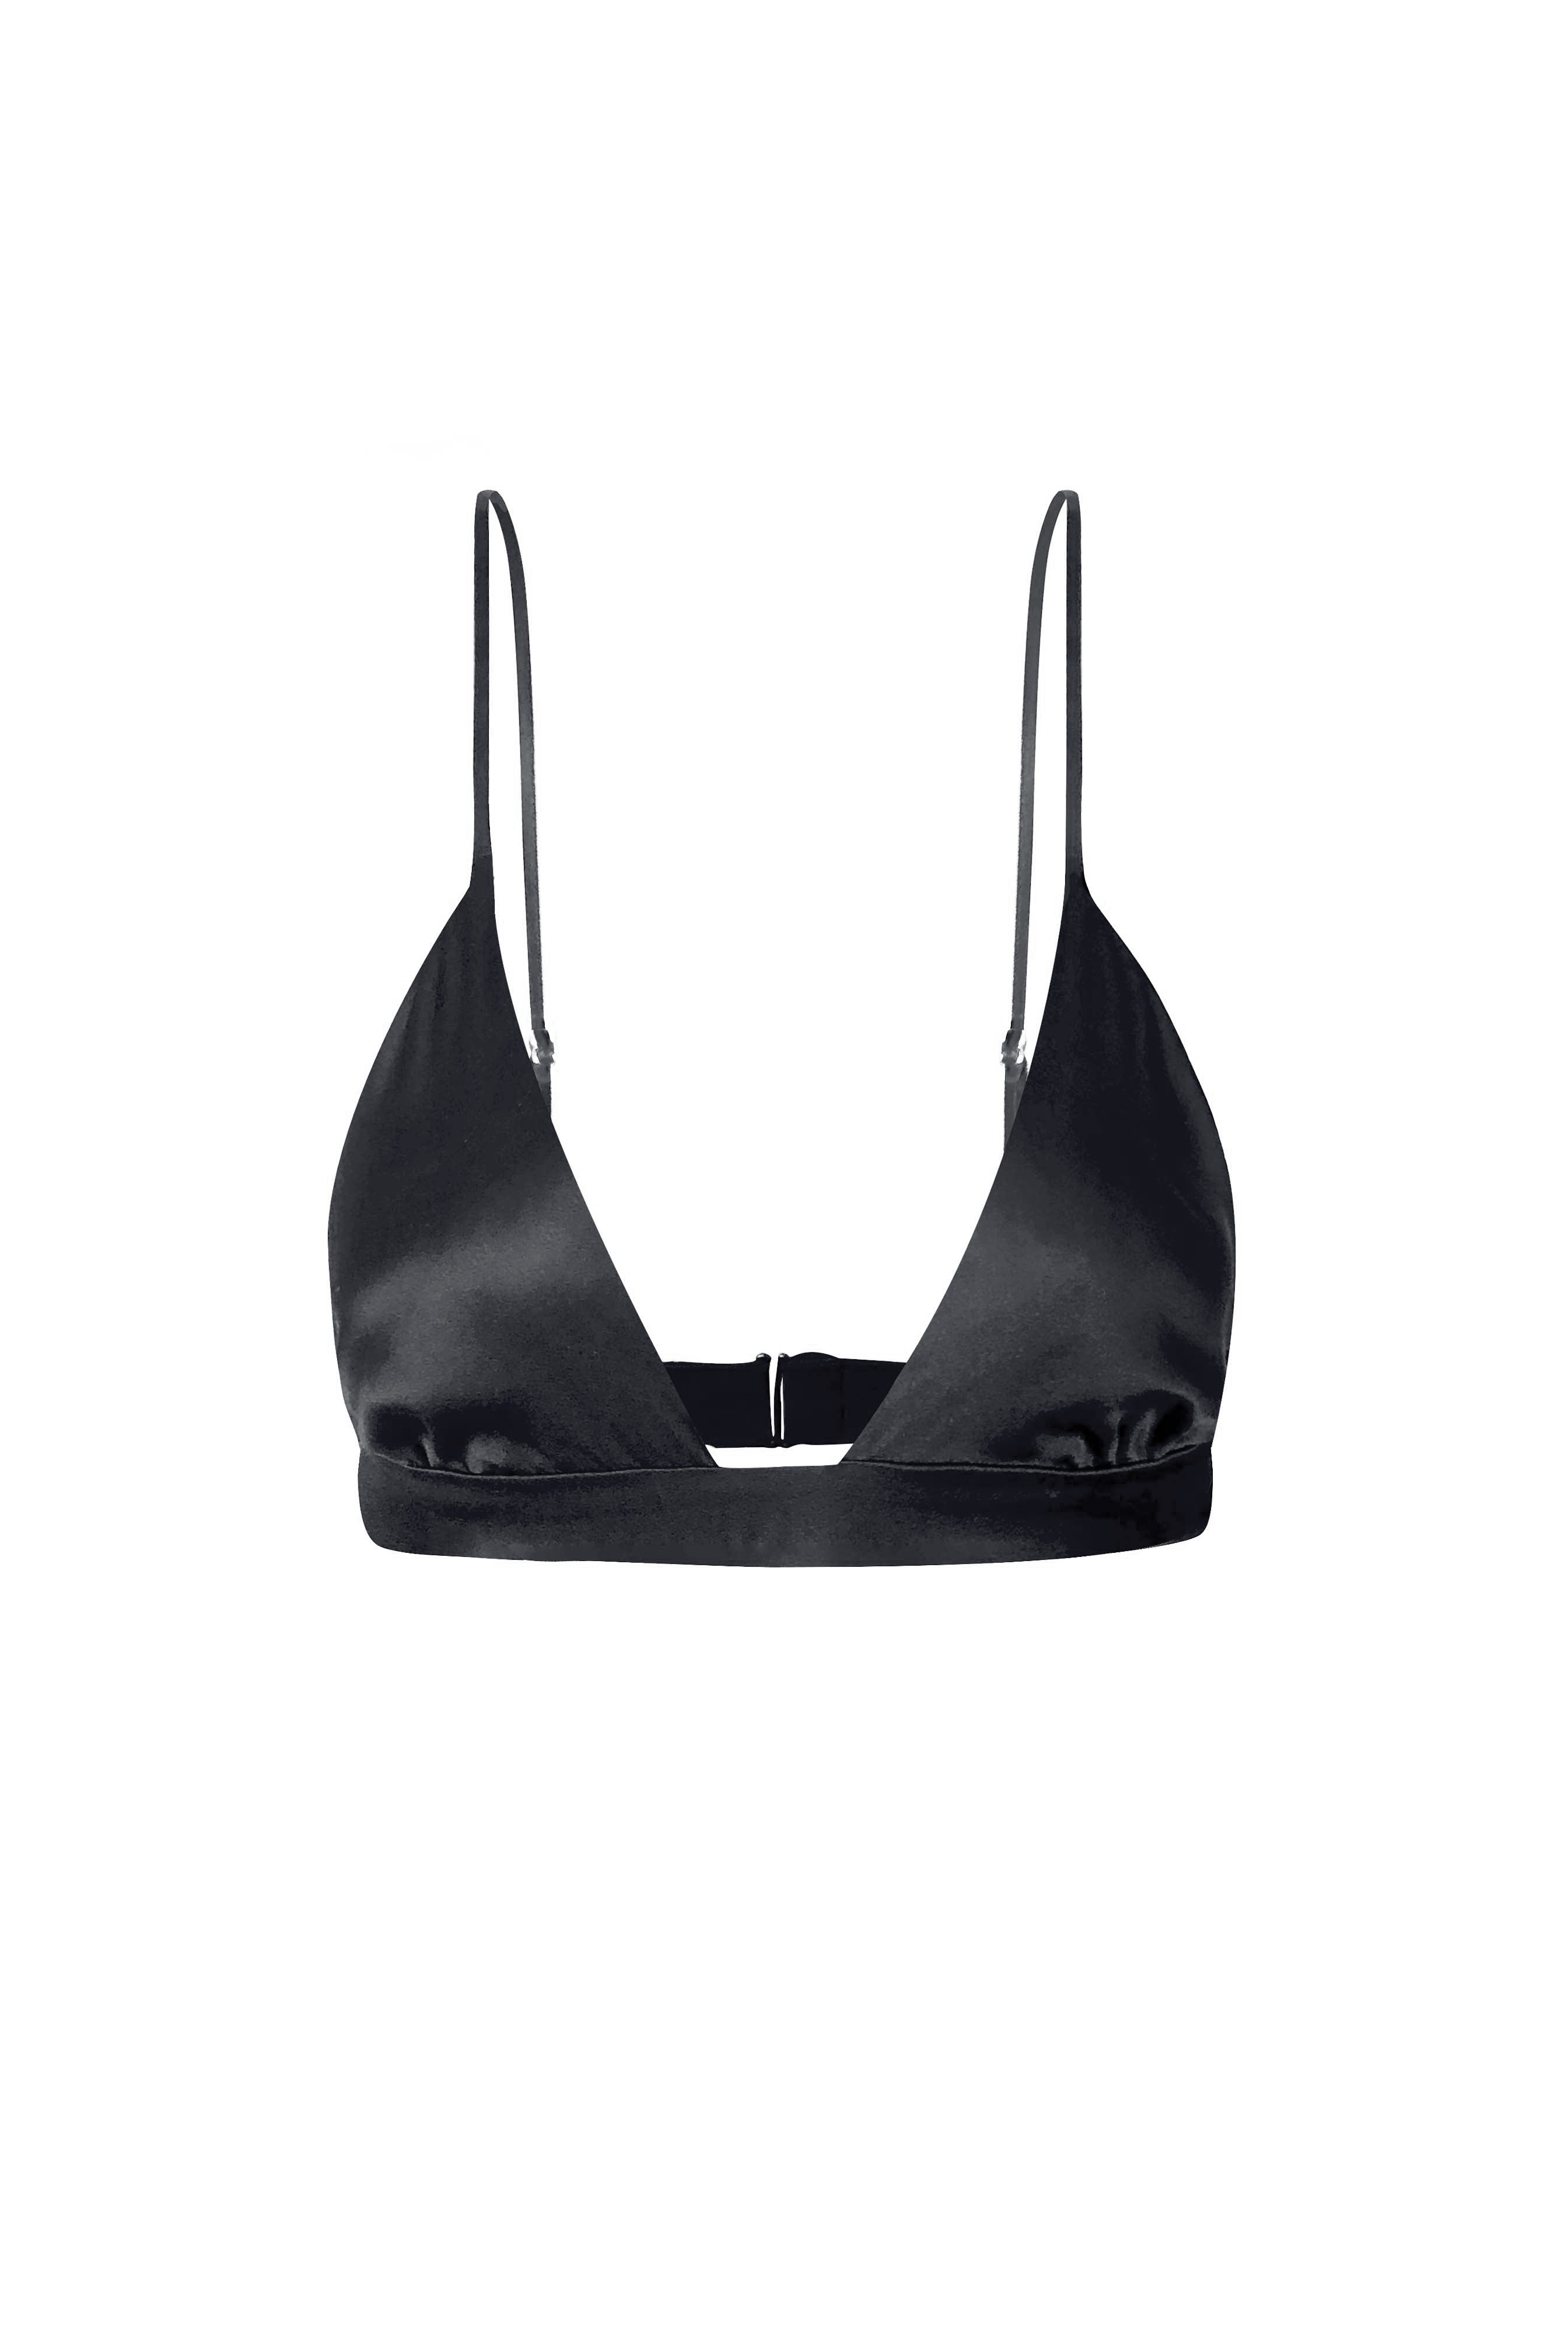 WANGPIN Black Bralettes for Women Silk Triangle Cup Bra Wireless